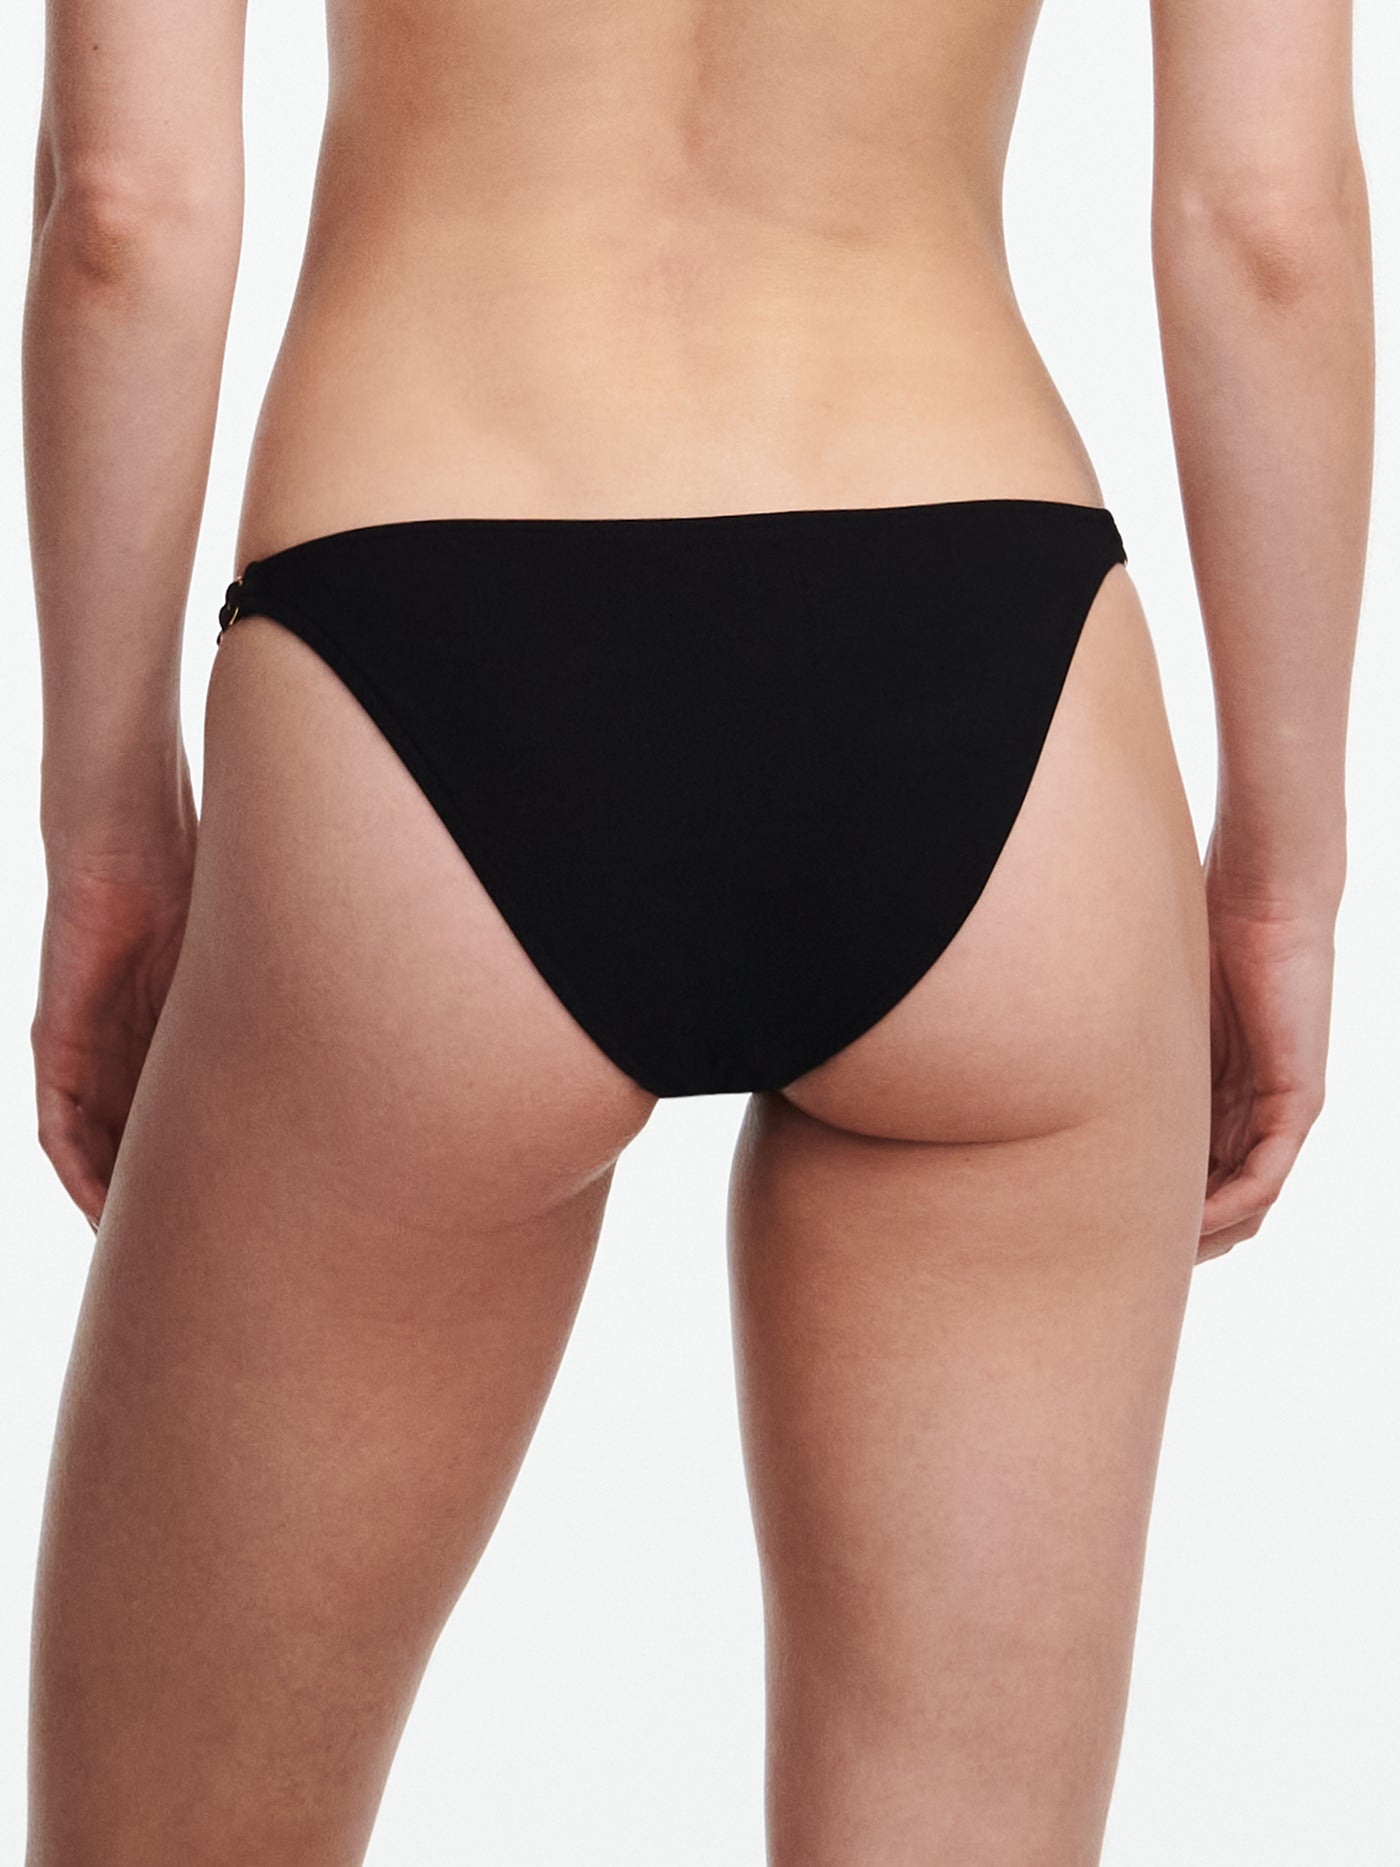 Chantelle Beachwear Emblem Bikini bottom Black